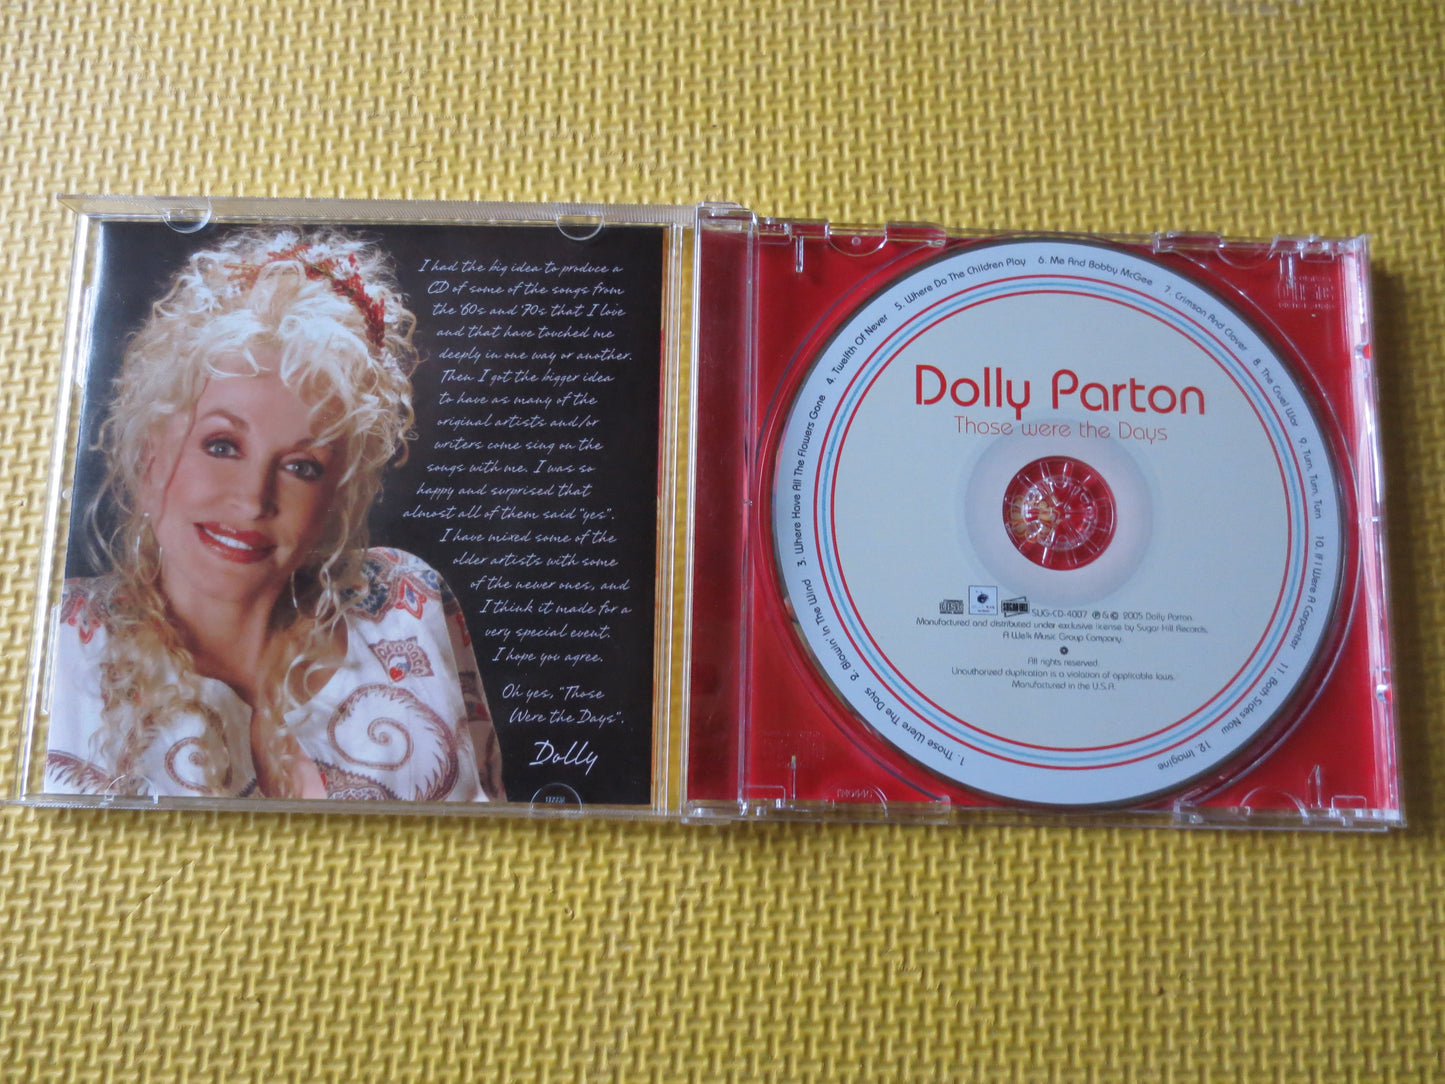 DOLLY PARTON, Those Were The Days, DOLLY Parton Cd, Classic Country Cd, Country Music Cd, Dolly Parton Album, Cds, Compact Disc